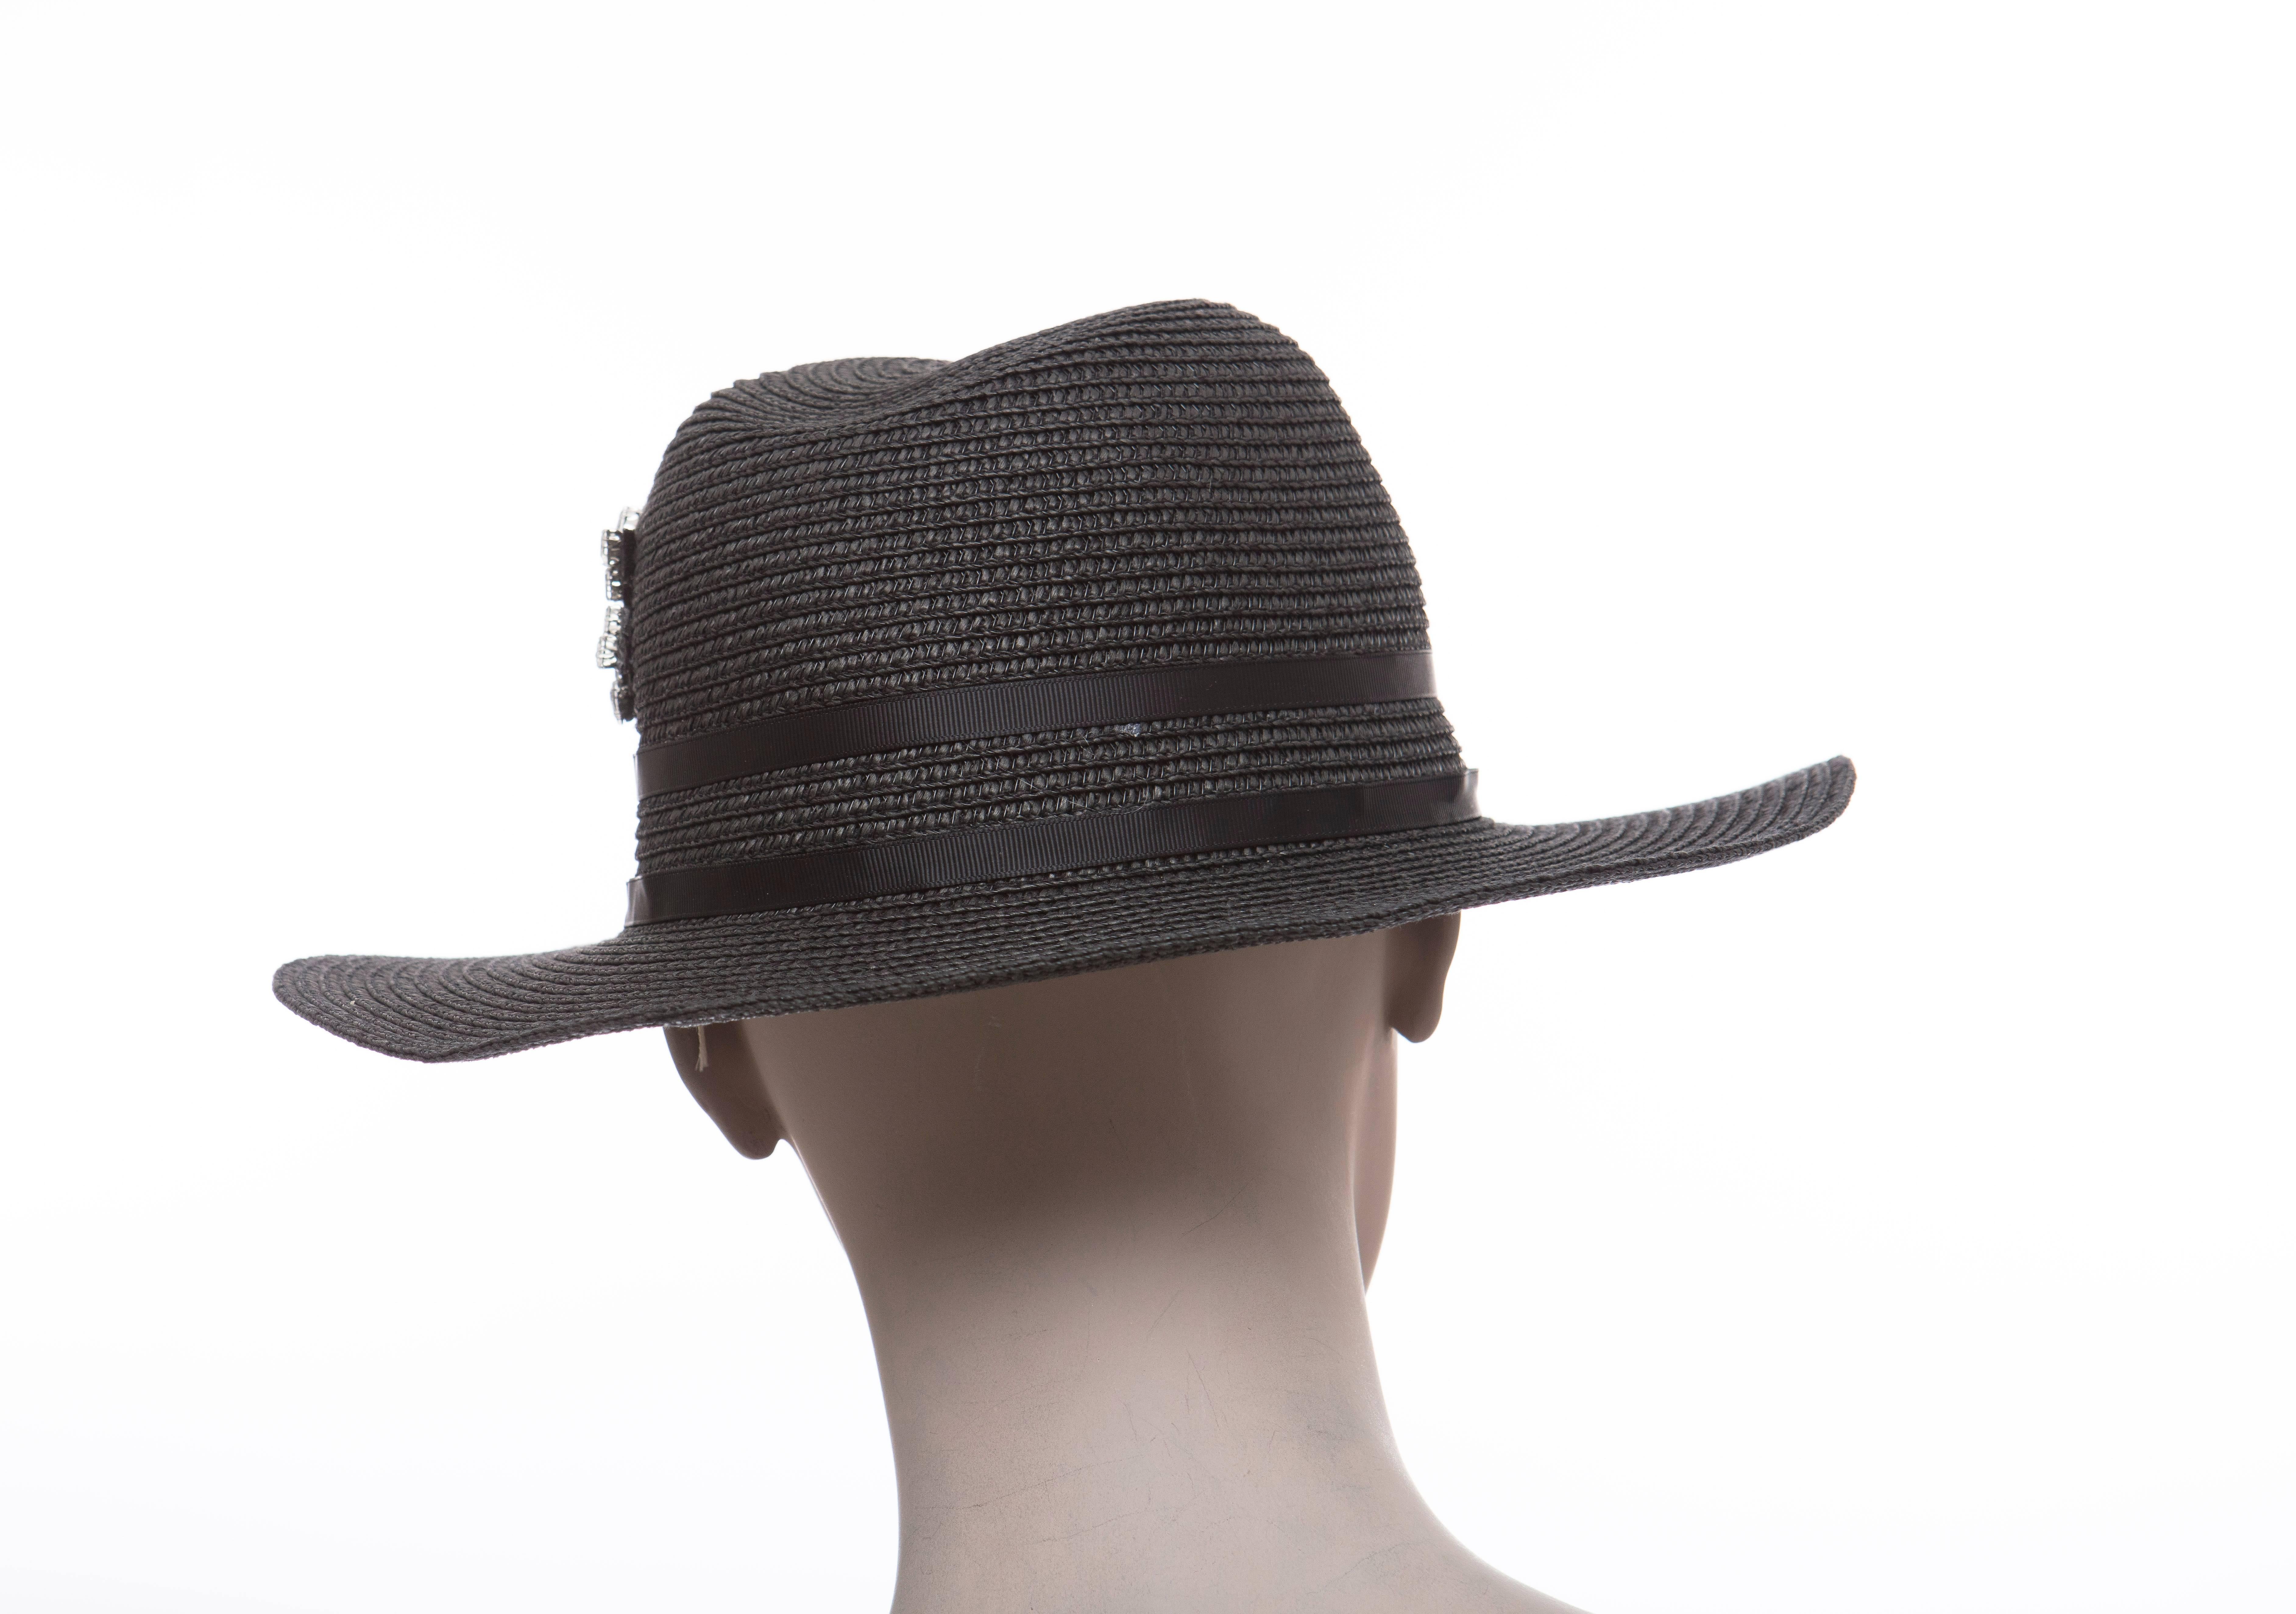 Yves Saint Laurent Black Straw Hat With Crystal Stars And Black Grosgrain Trim 2